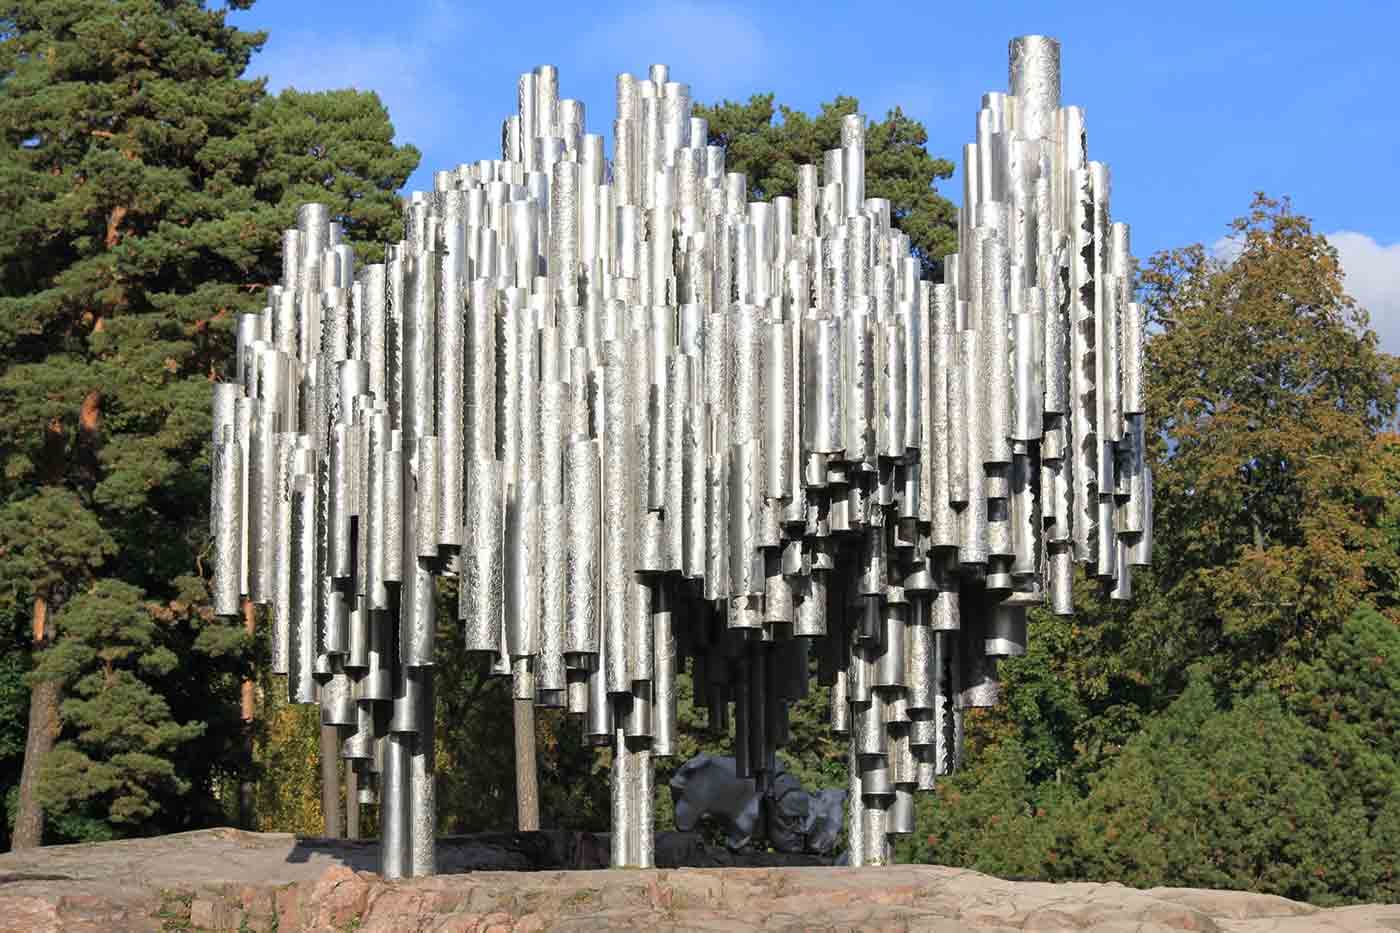 Sibelius Park and Monument